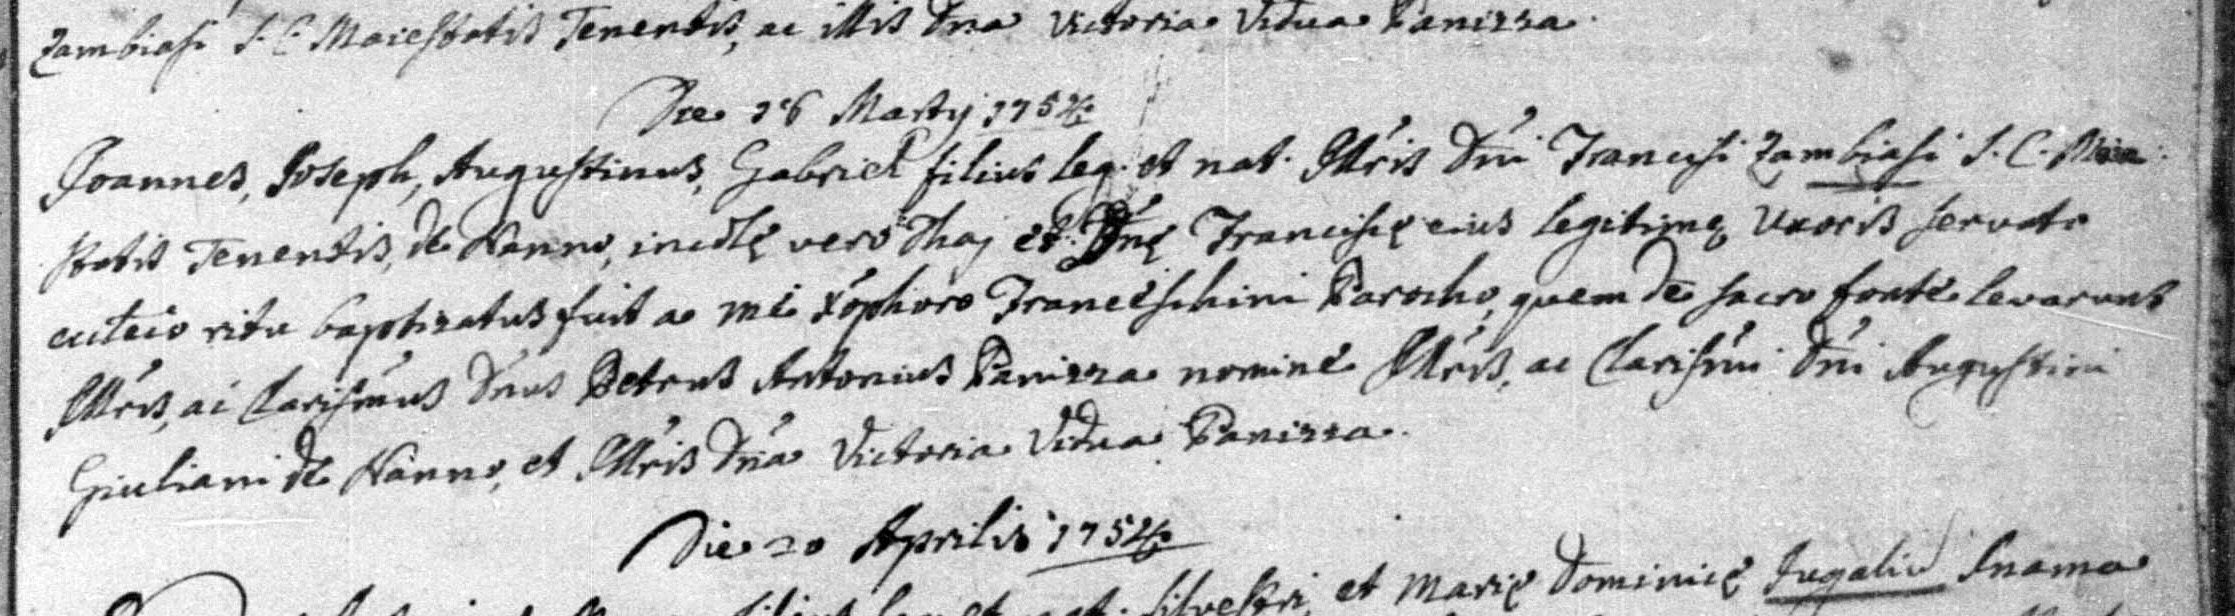 1754 baptismal record of Giovanni Giuseppe Agostino Gabriele Zambiasi of Taio, later known as 'Joseph Bellomo'.